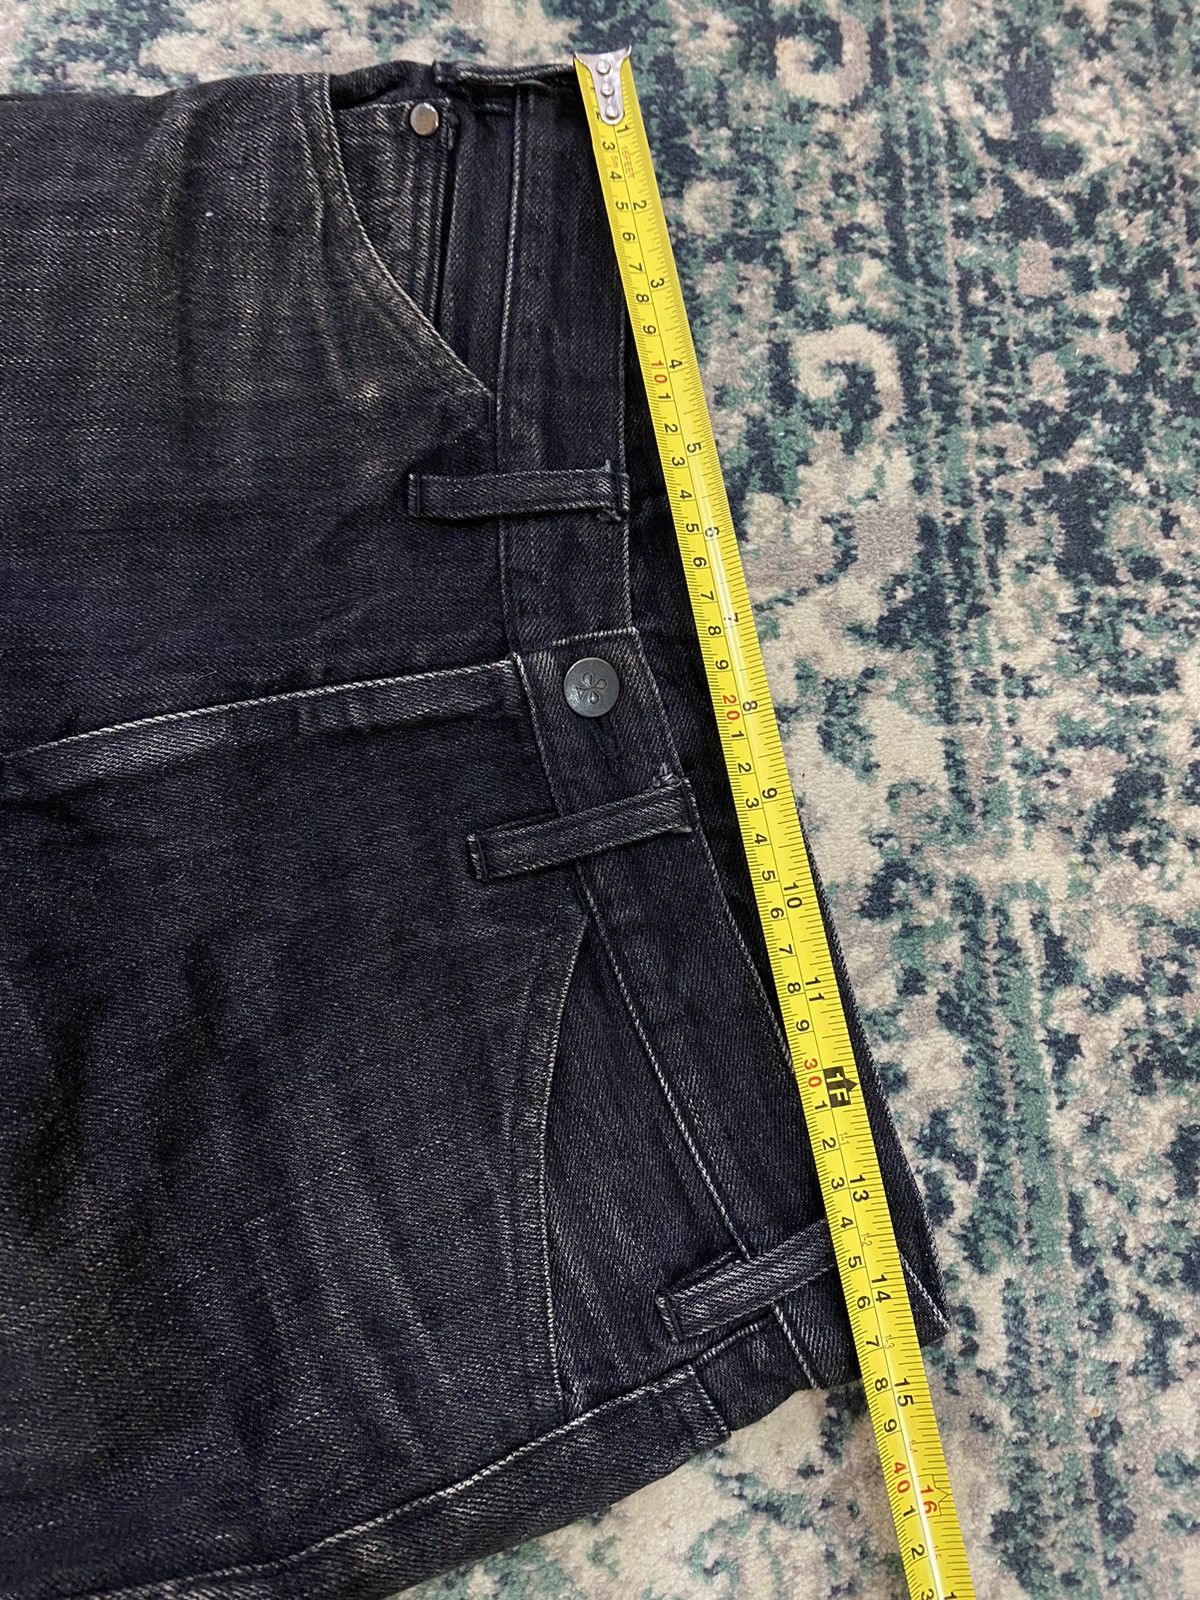 Lemaire Black Leather Lining Pocket Jeans - 15